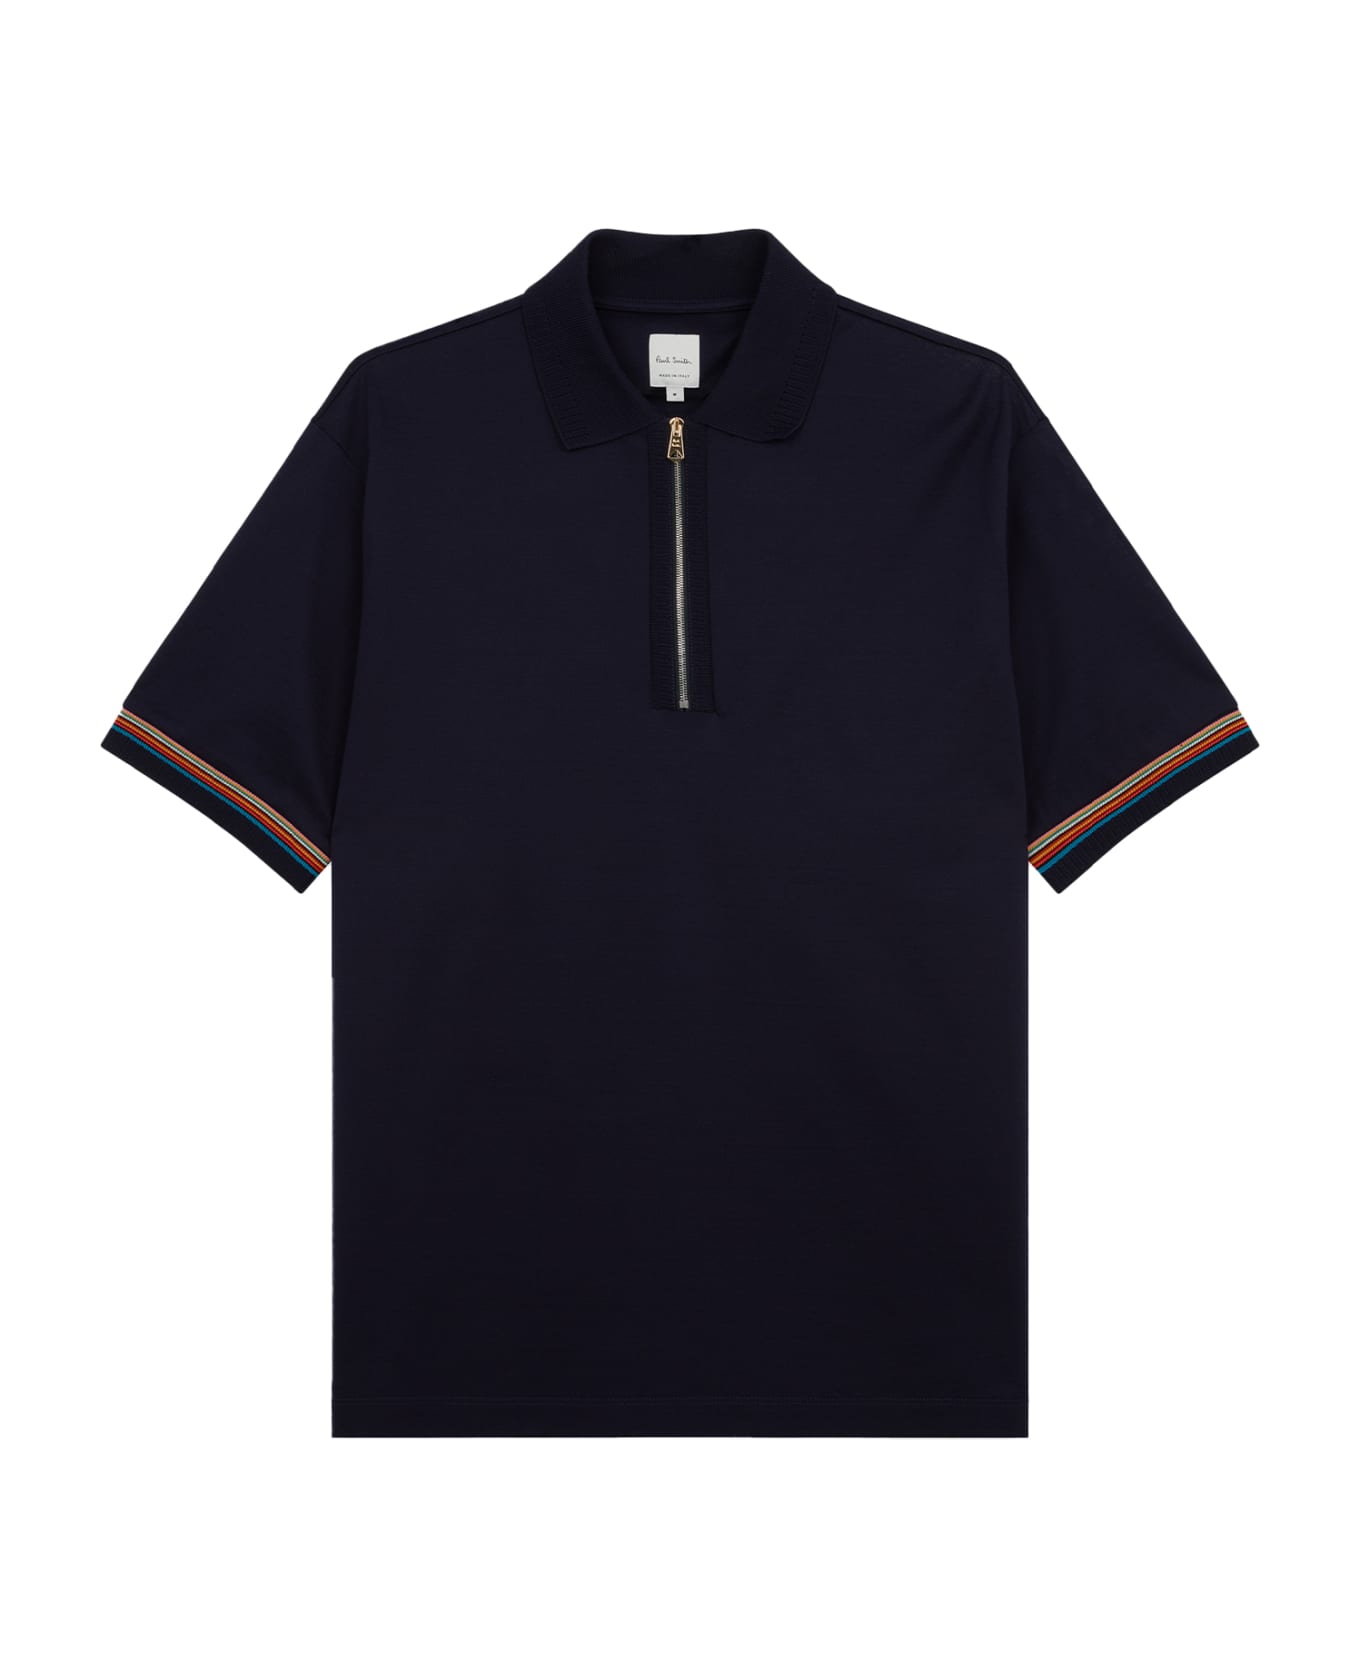 Paul Smith Dark Navy Short-sleeved Polo Shirt - DK NAVY ポロシャツ